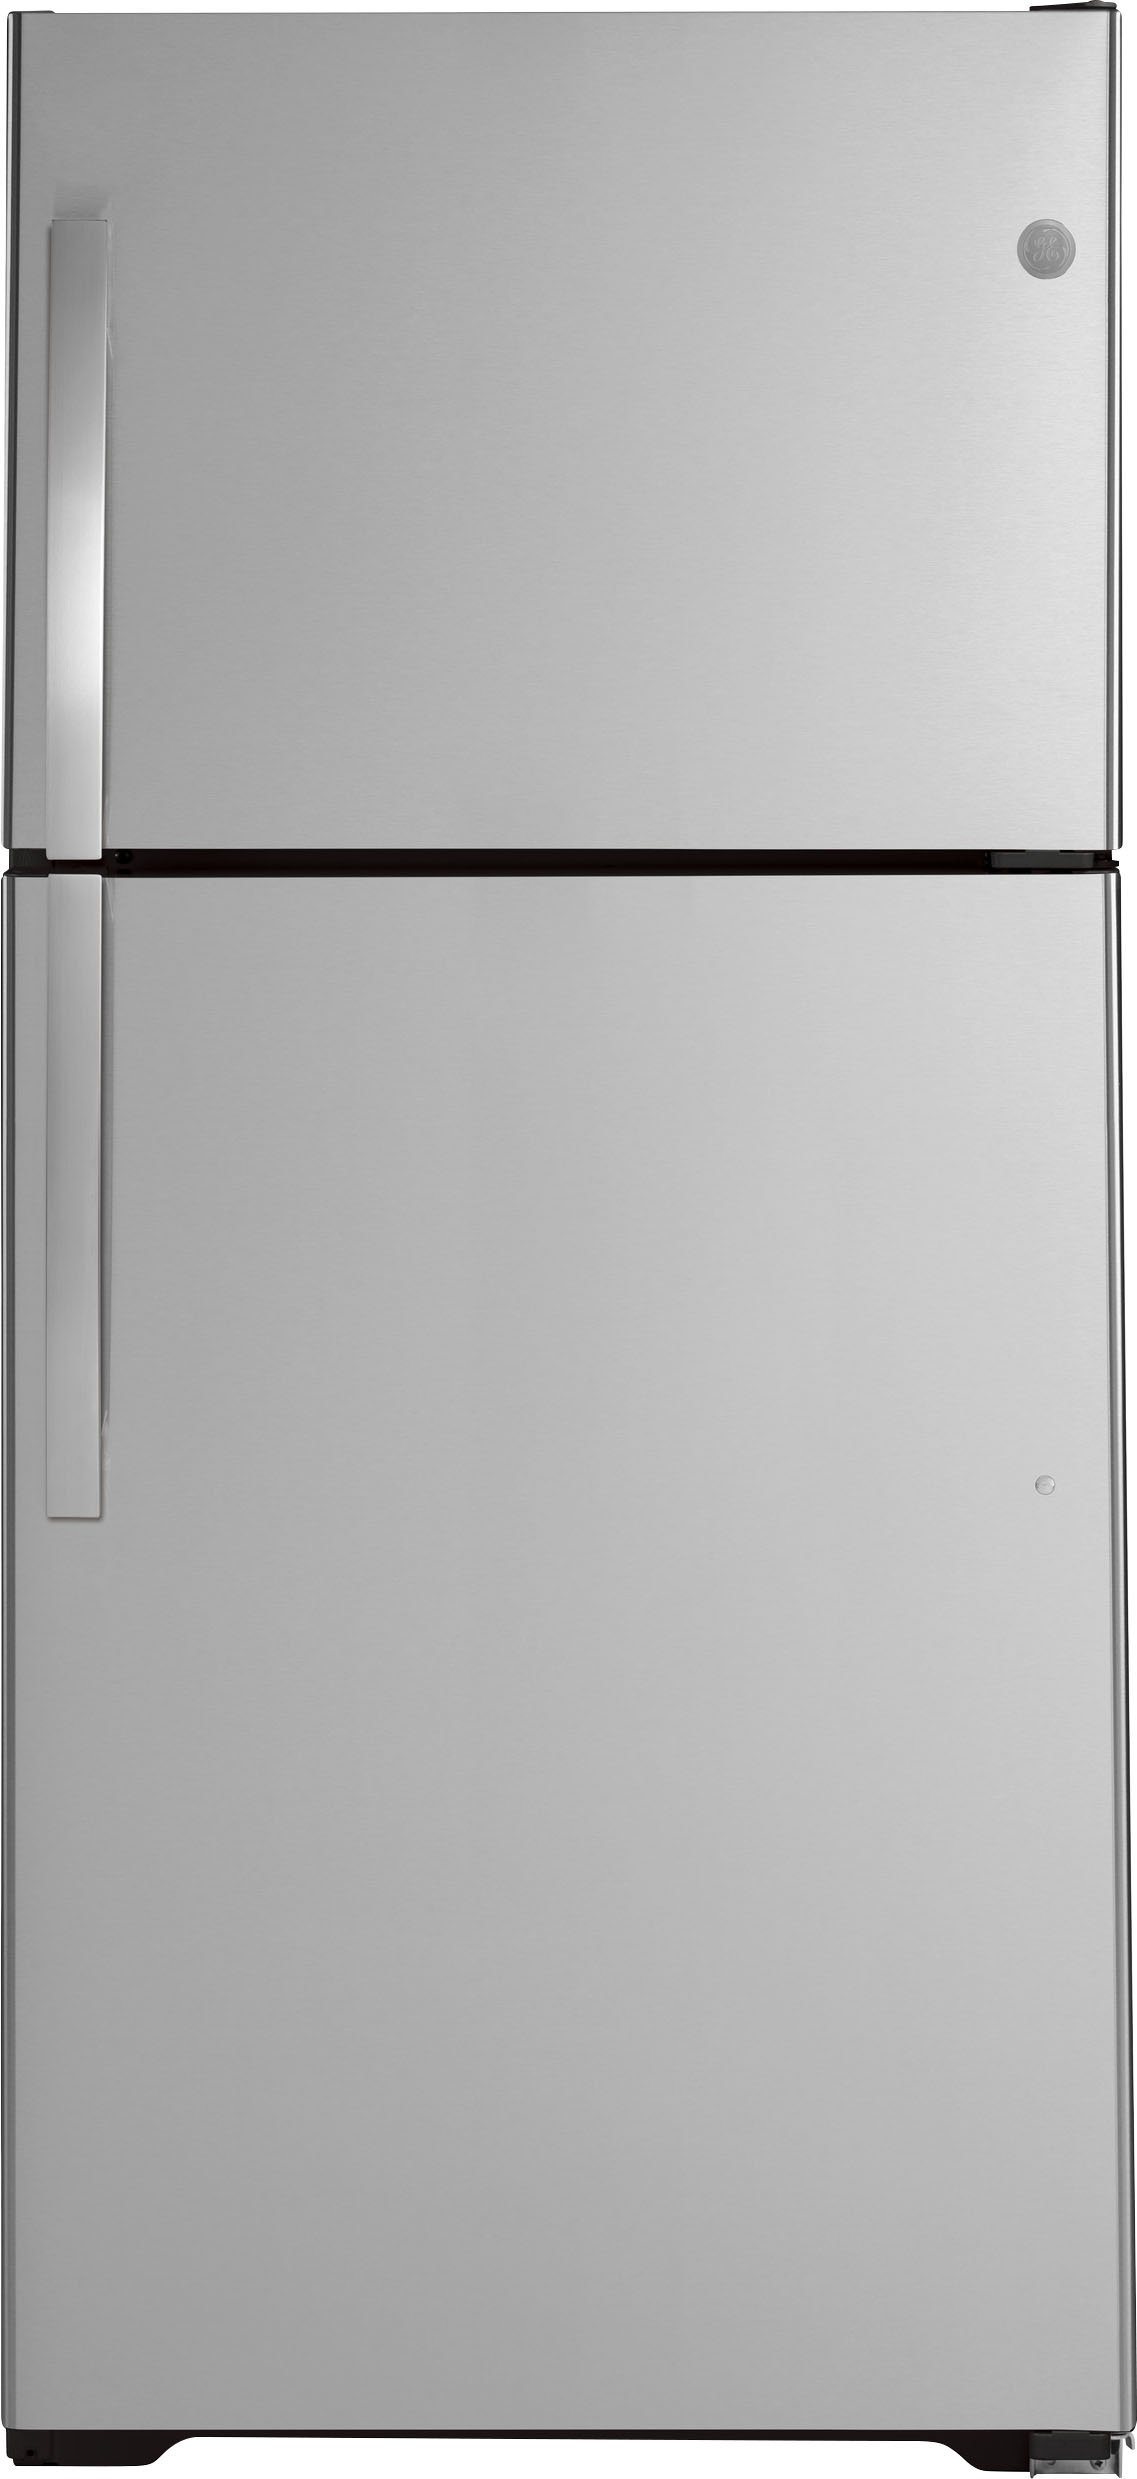 GE – 21.9 Cu. Ft. Top-Freezer Refrigerator – Fingerprint resistant stainless steel